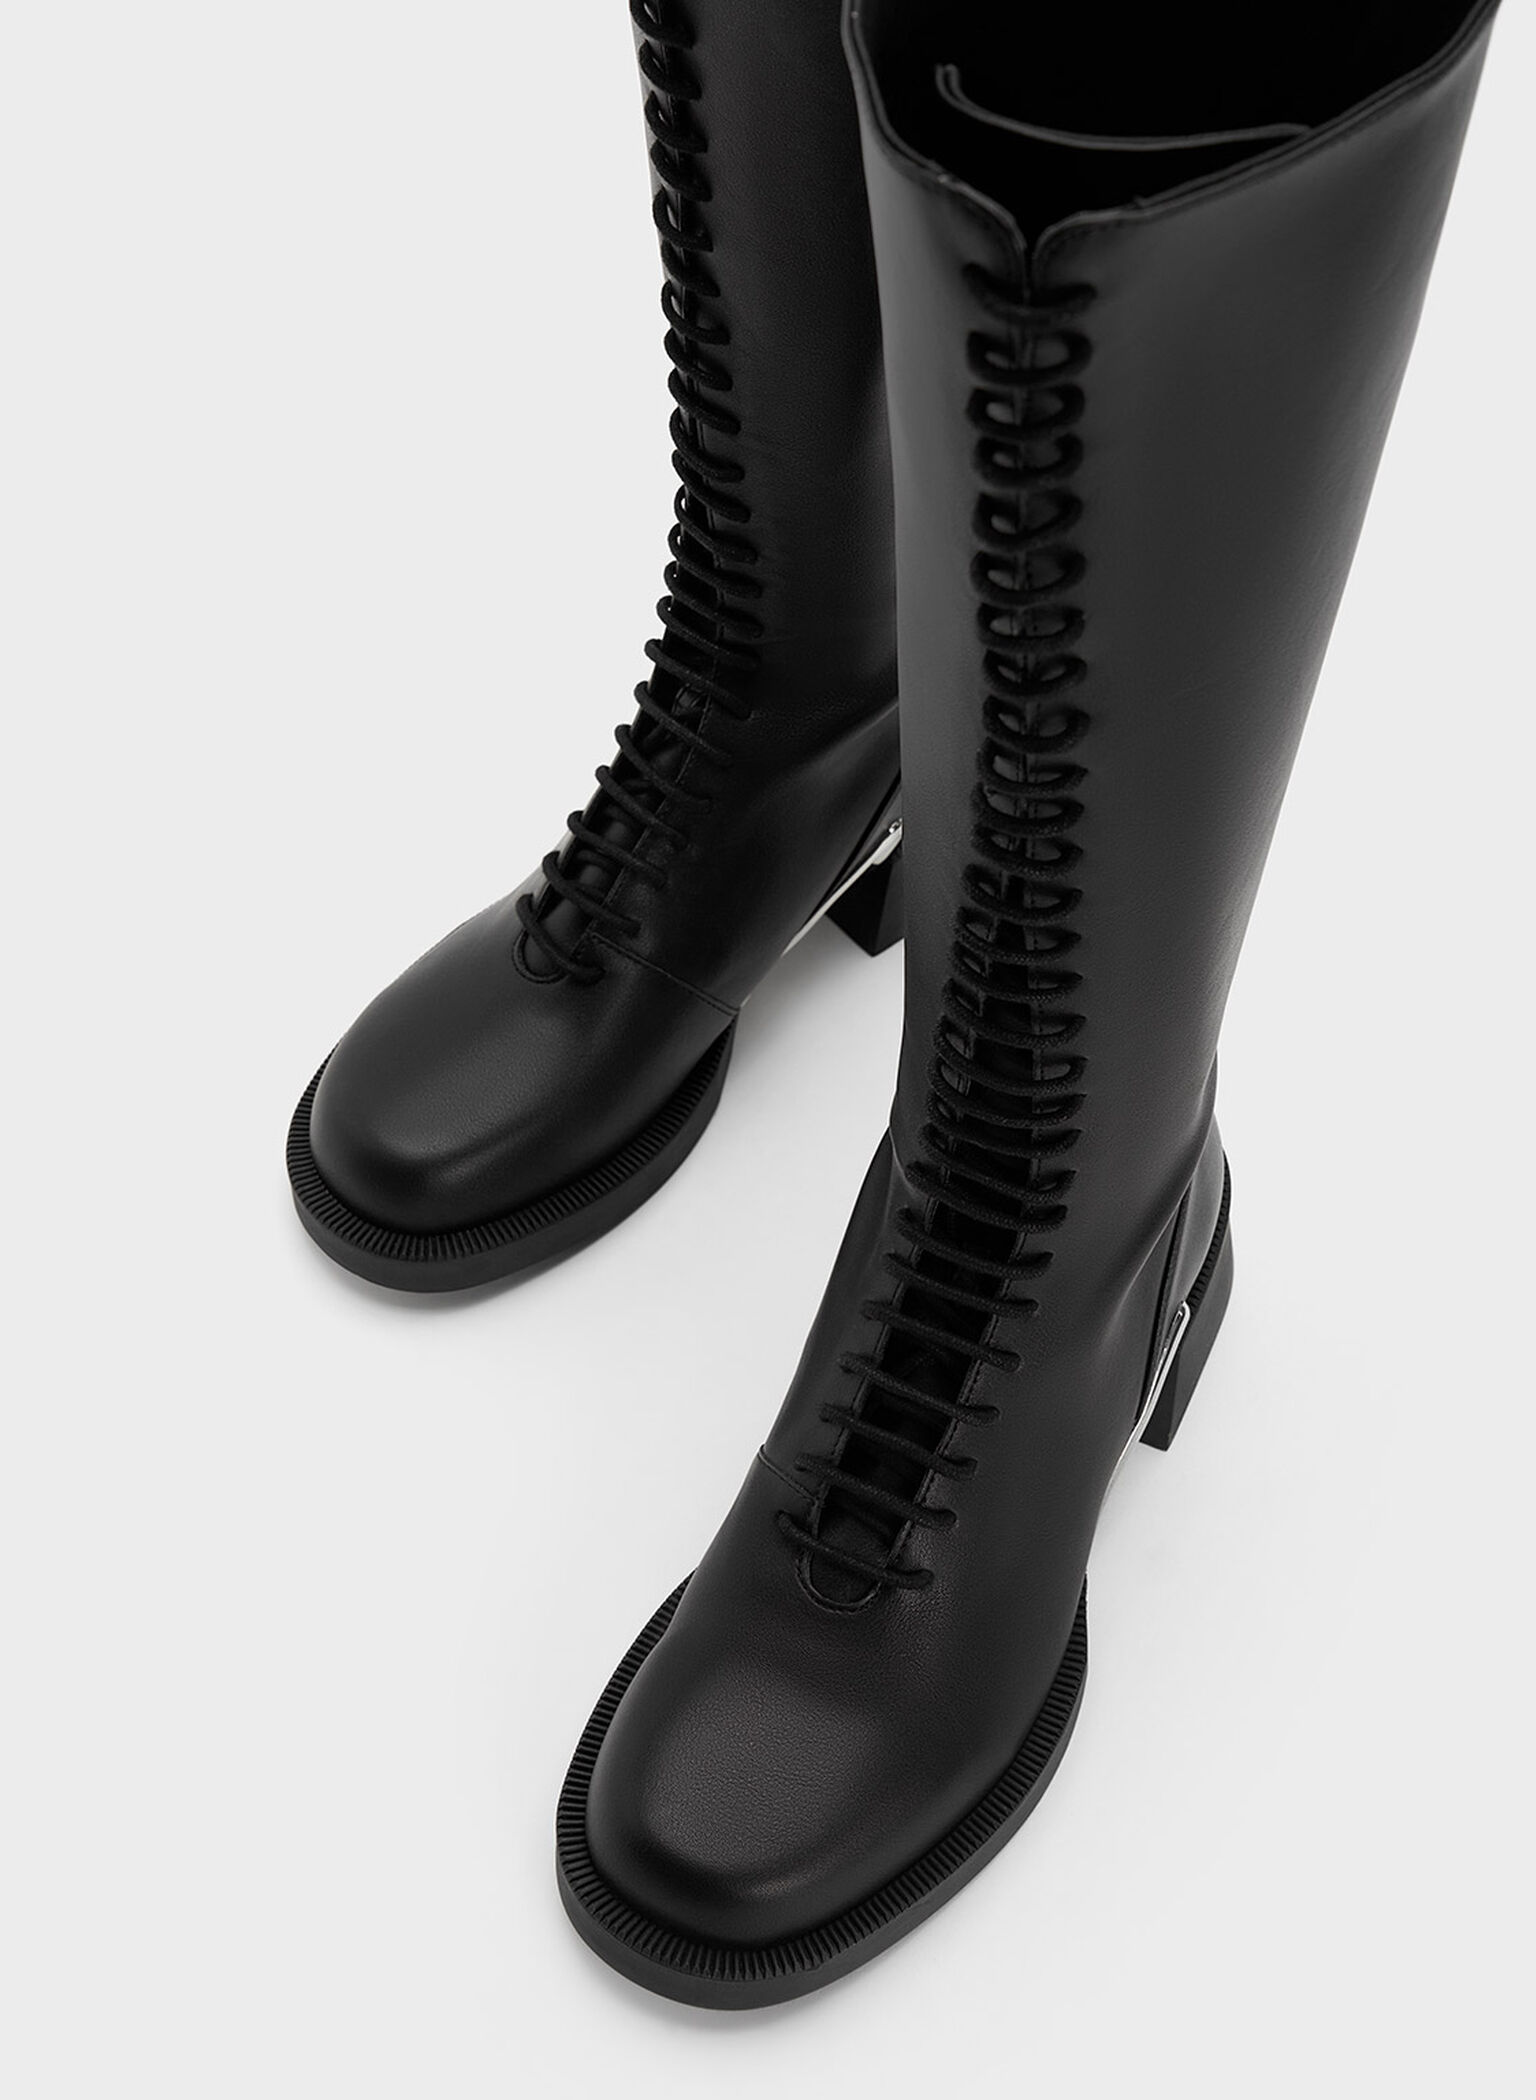 Devon Metallic-Accent Lace-Up Knee-High Boots, Black, hi-res